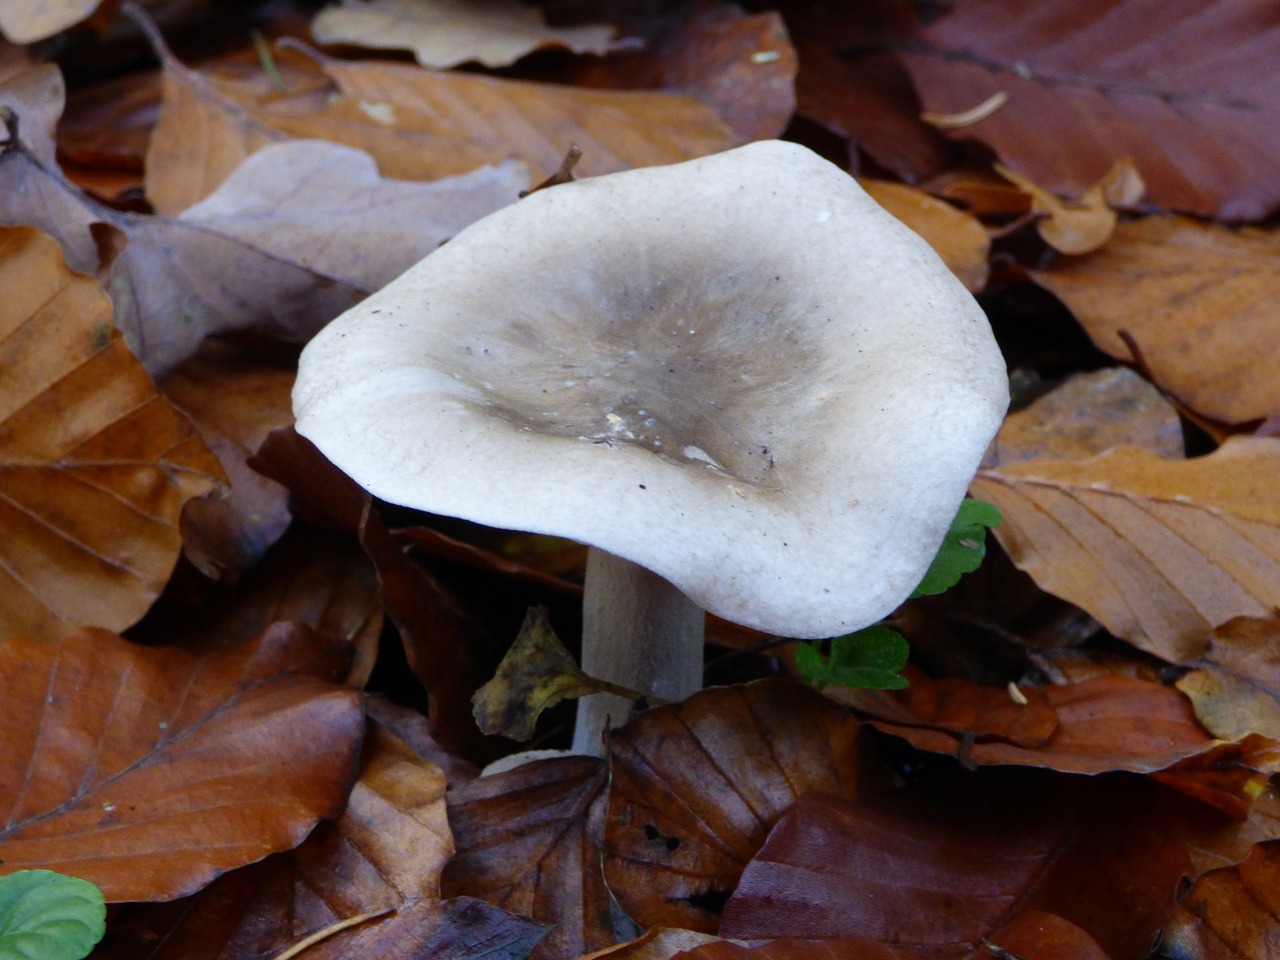 autumn forest mushroom free photo